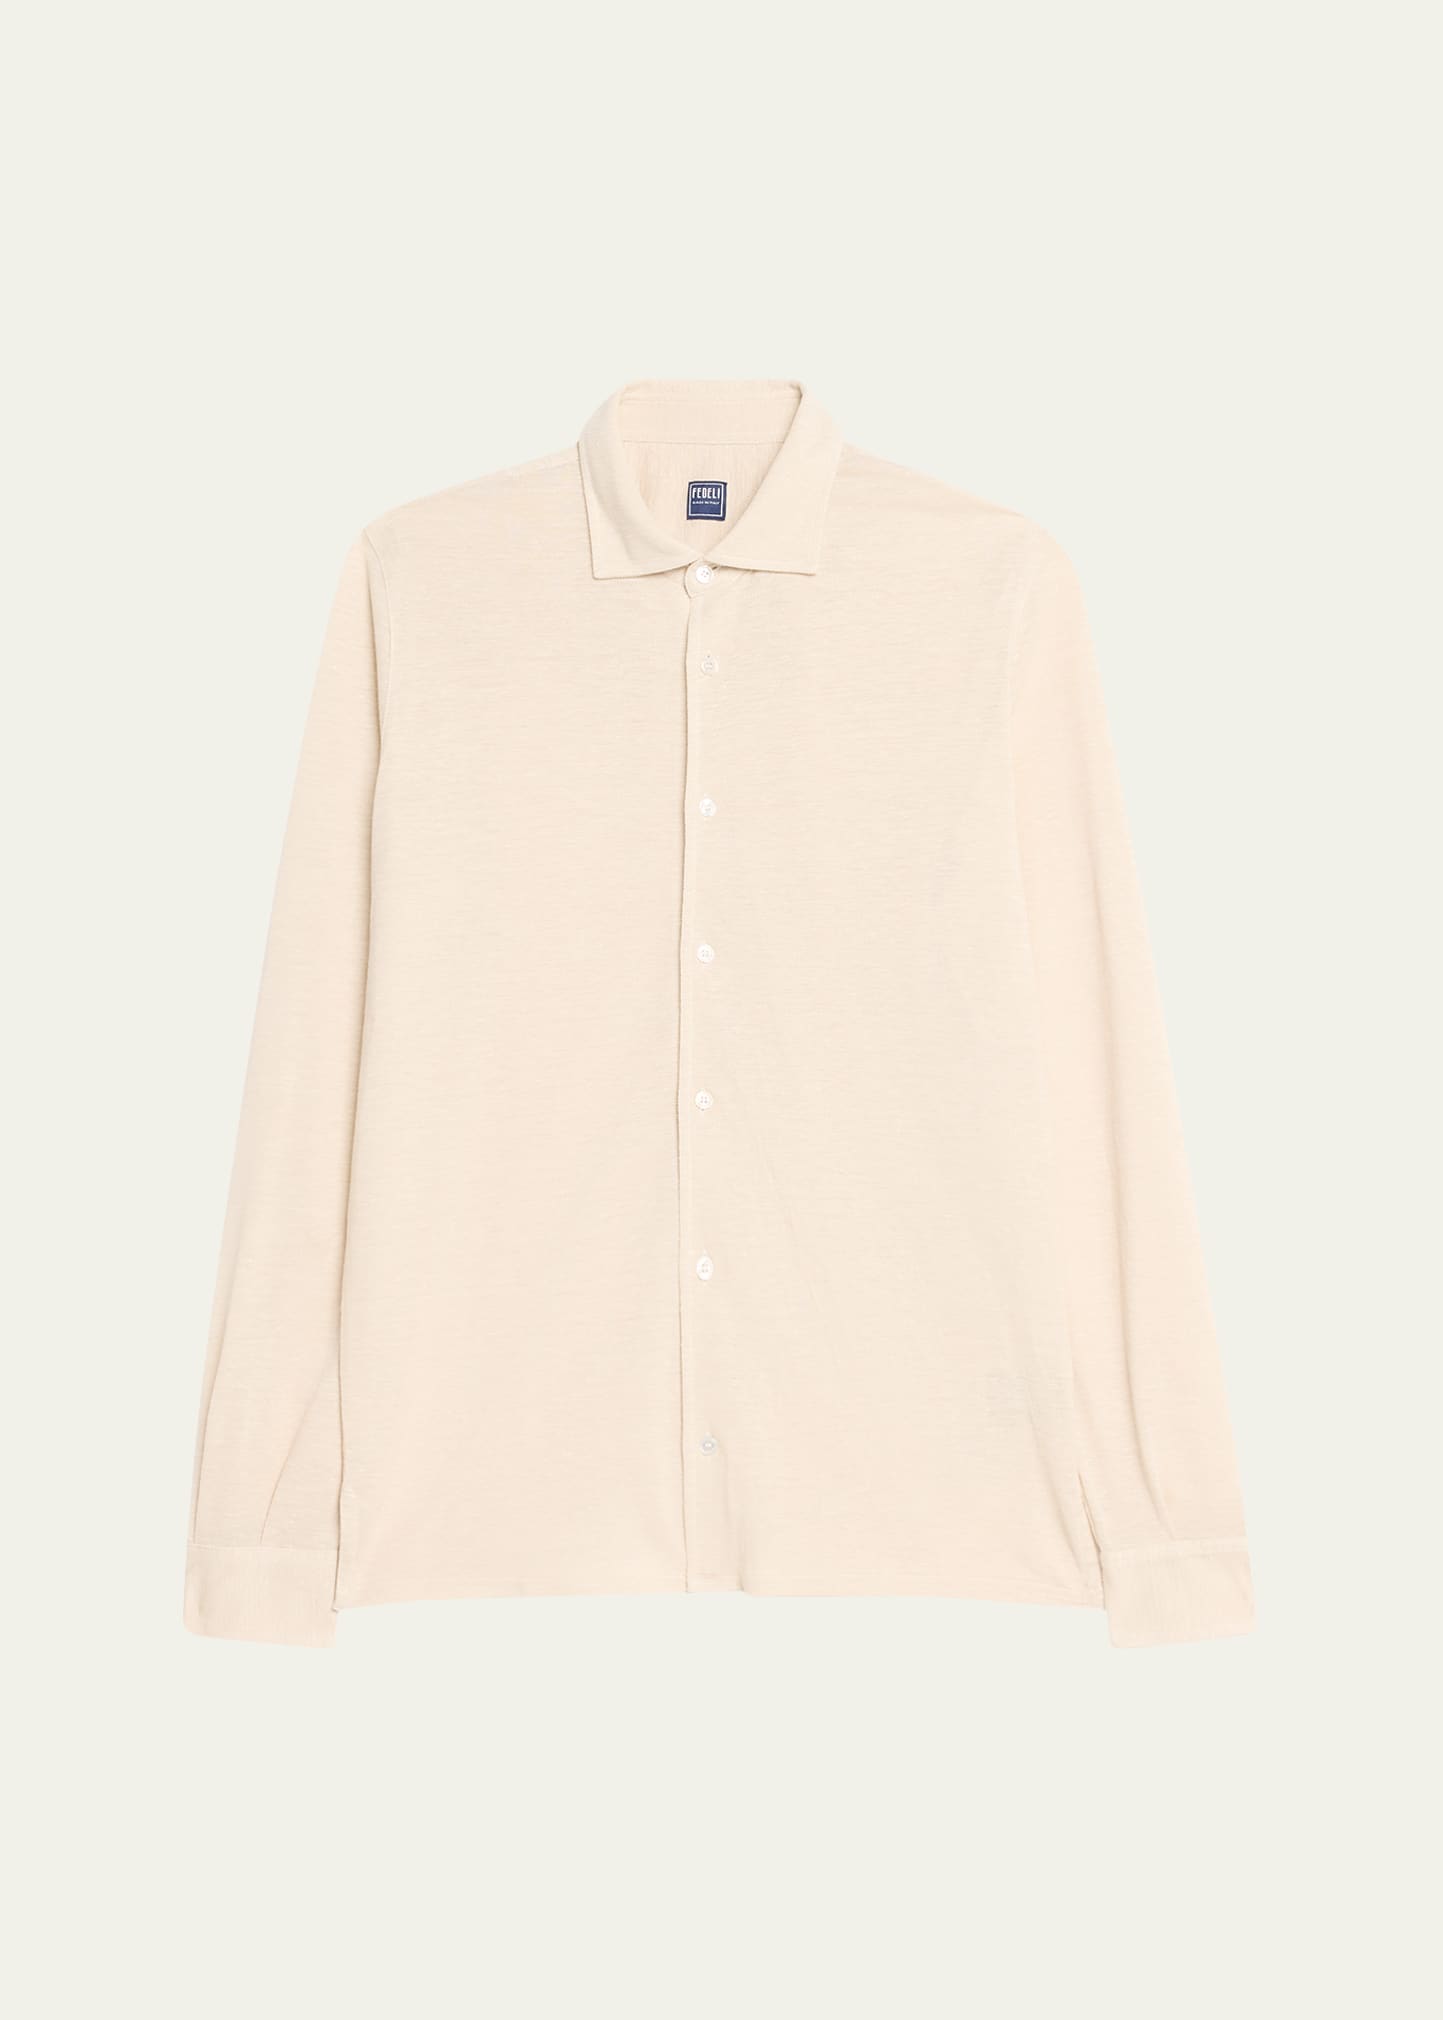 Fedeli Men's Linen-cotton Pique Polo Shirt In Beige